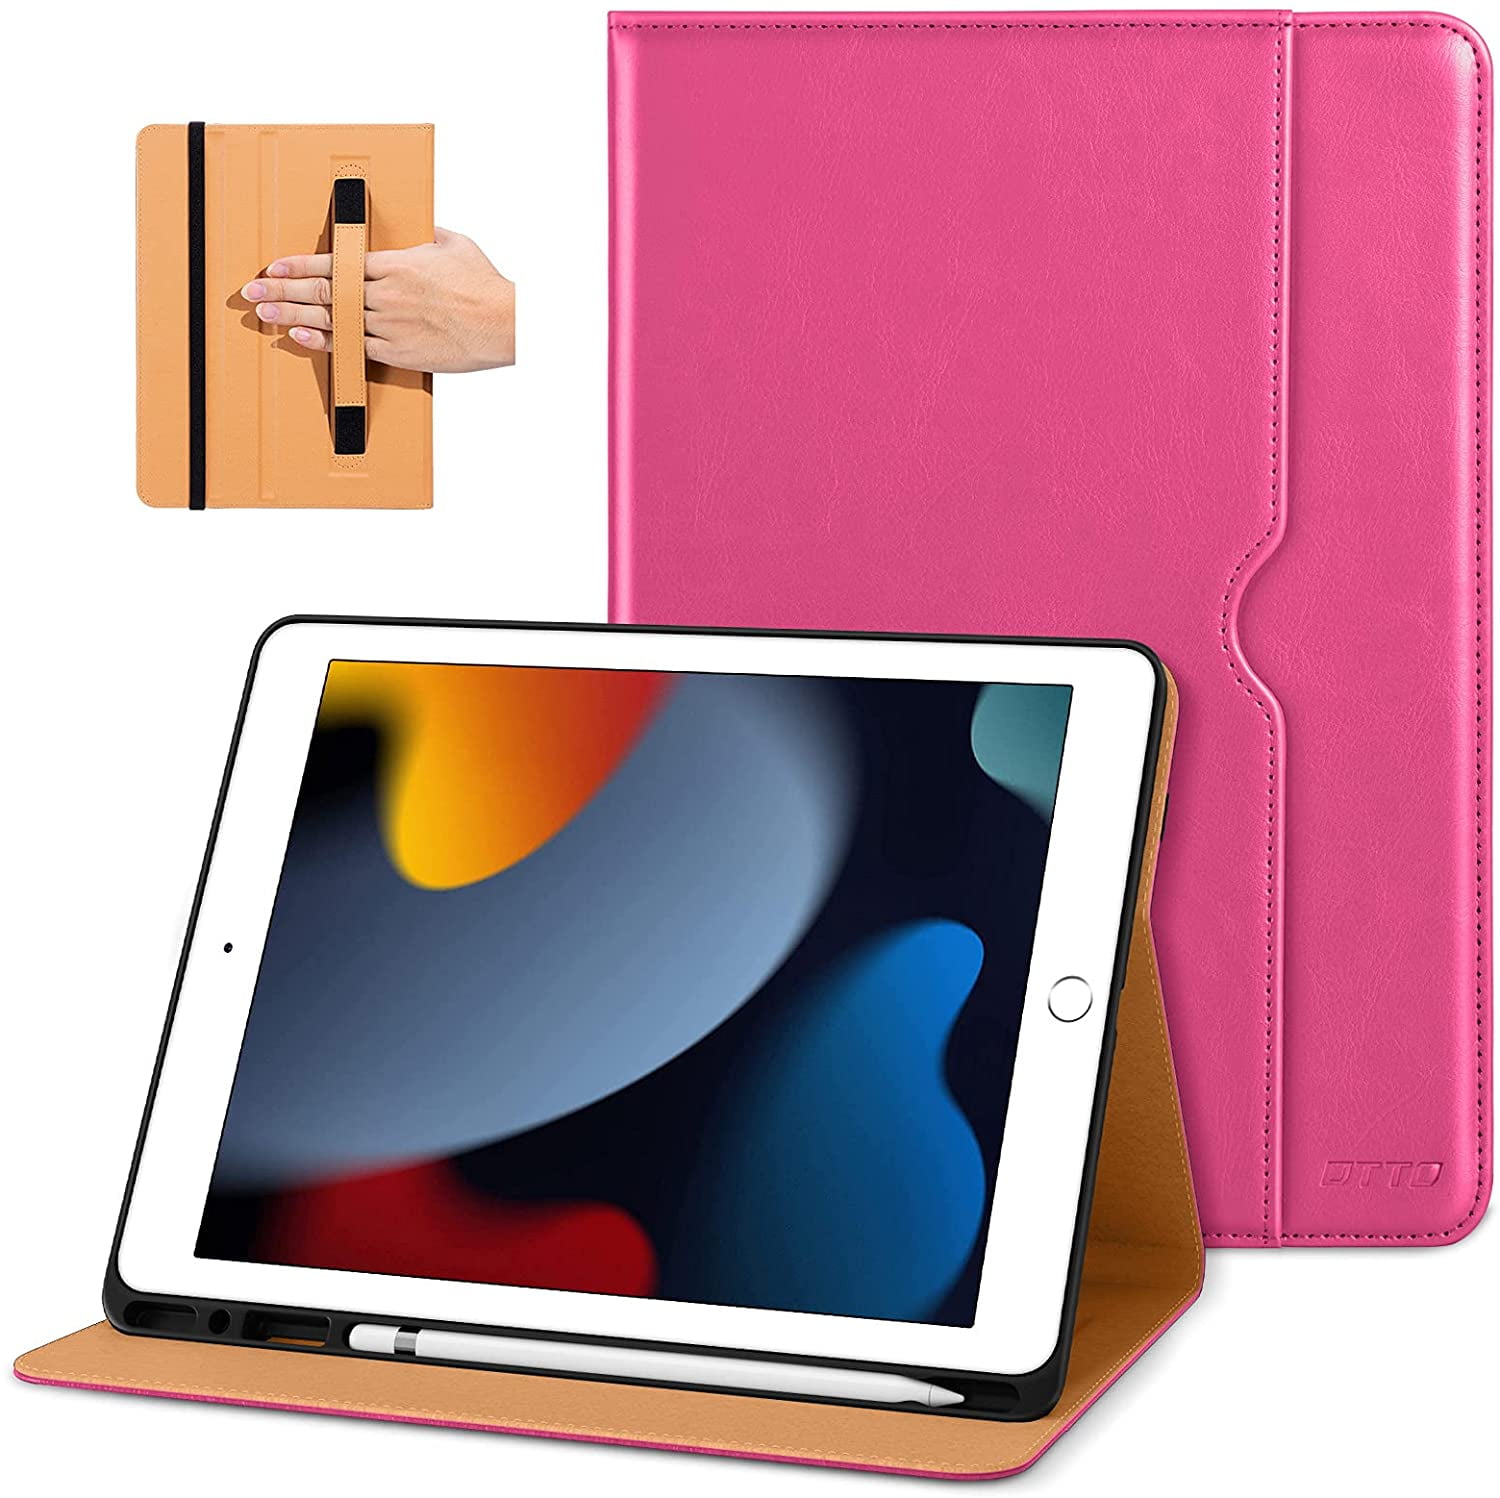 Elastic Hand Strap, Multi-Angle, Card Holder With Bonus Stylus 1 Year Warranty Purple i-BLASON Apple iPad Air Case / iPad 5 Auto Wake / Sleep Smart Cover Leather Case